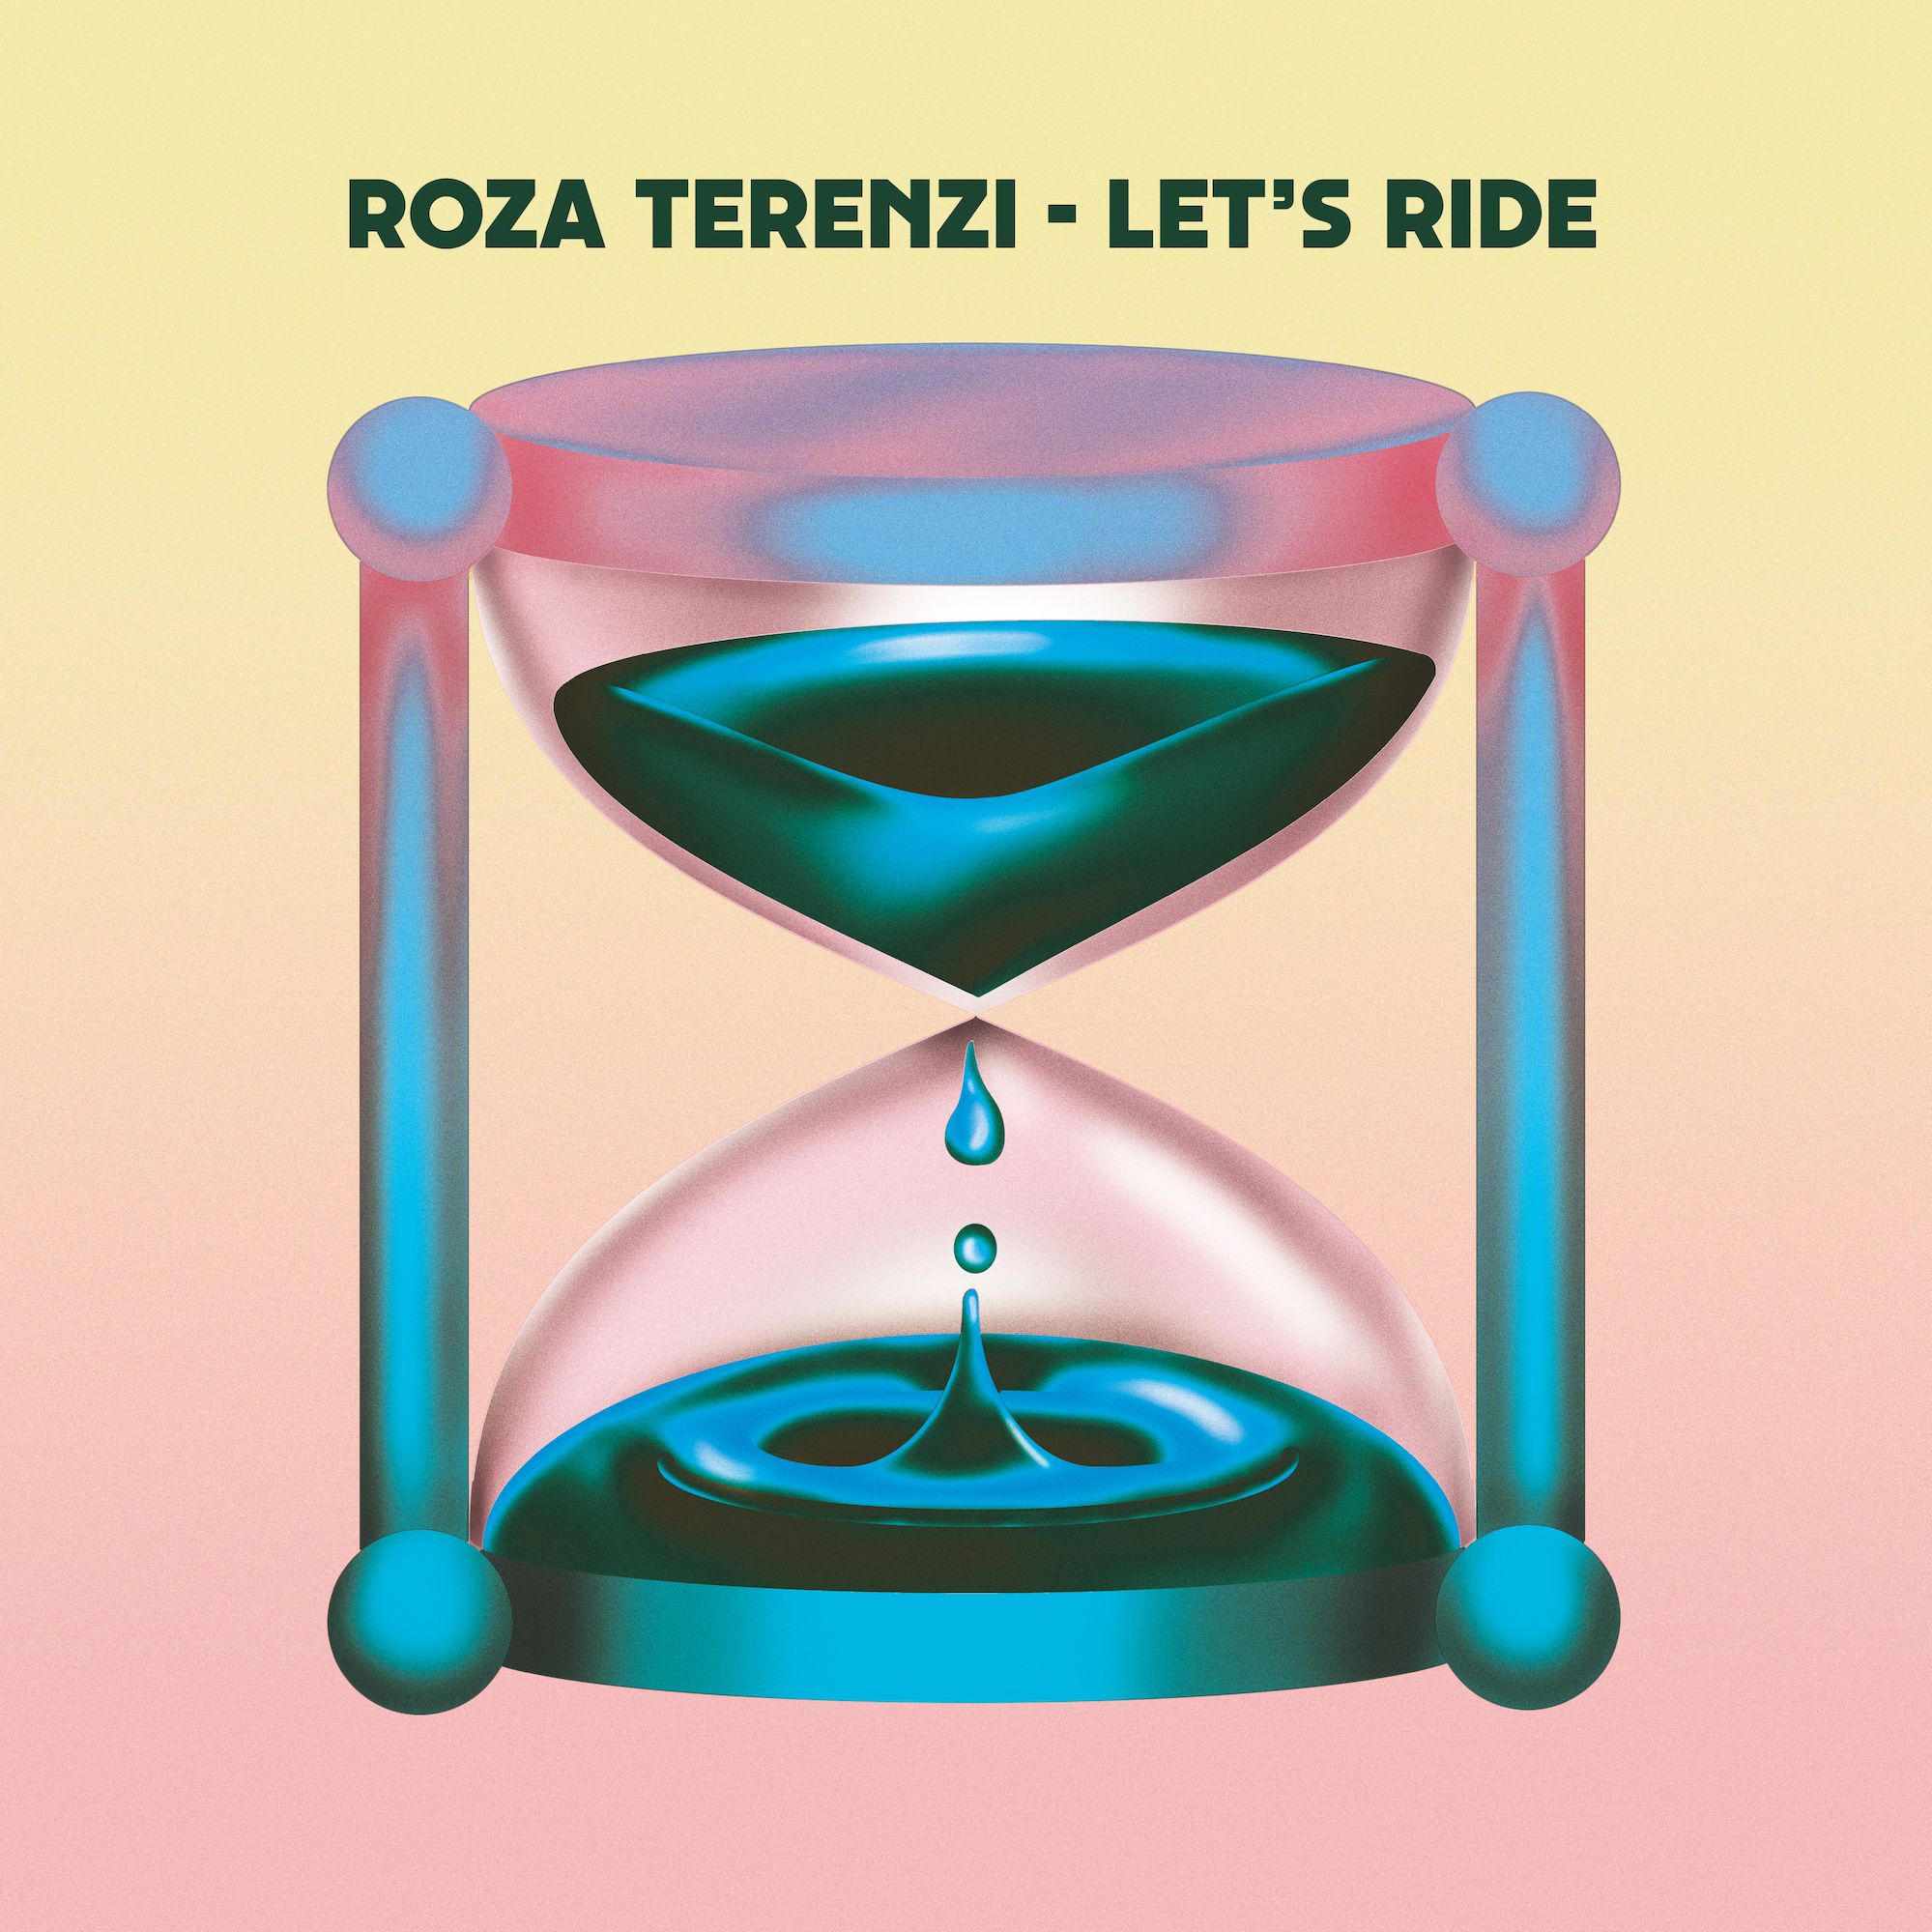 डाउनलोड करा Roza Terenzi "Open Me" [First Floor Premiere]